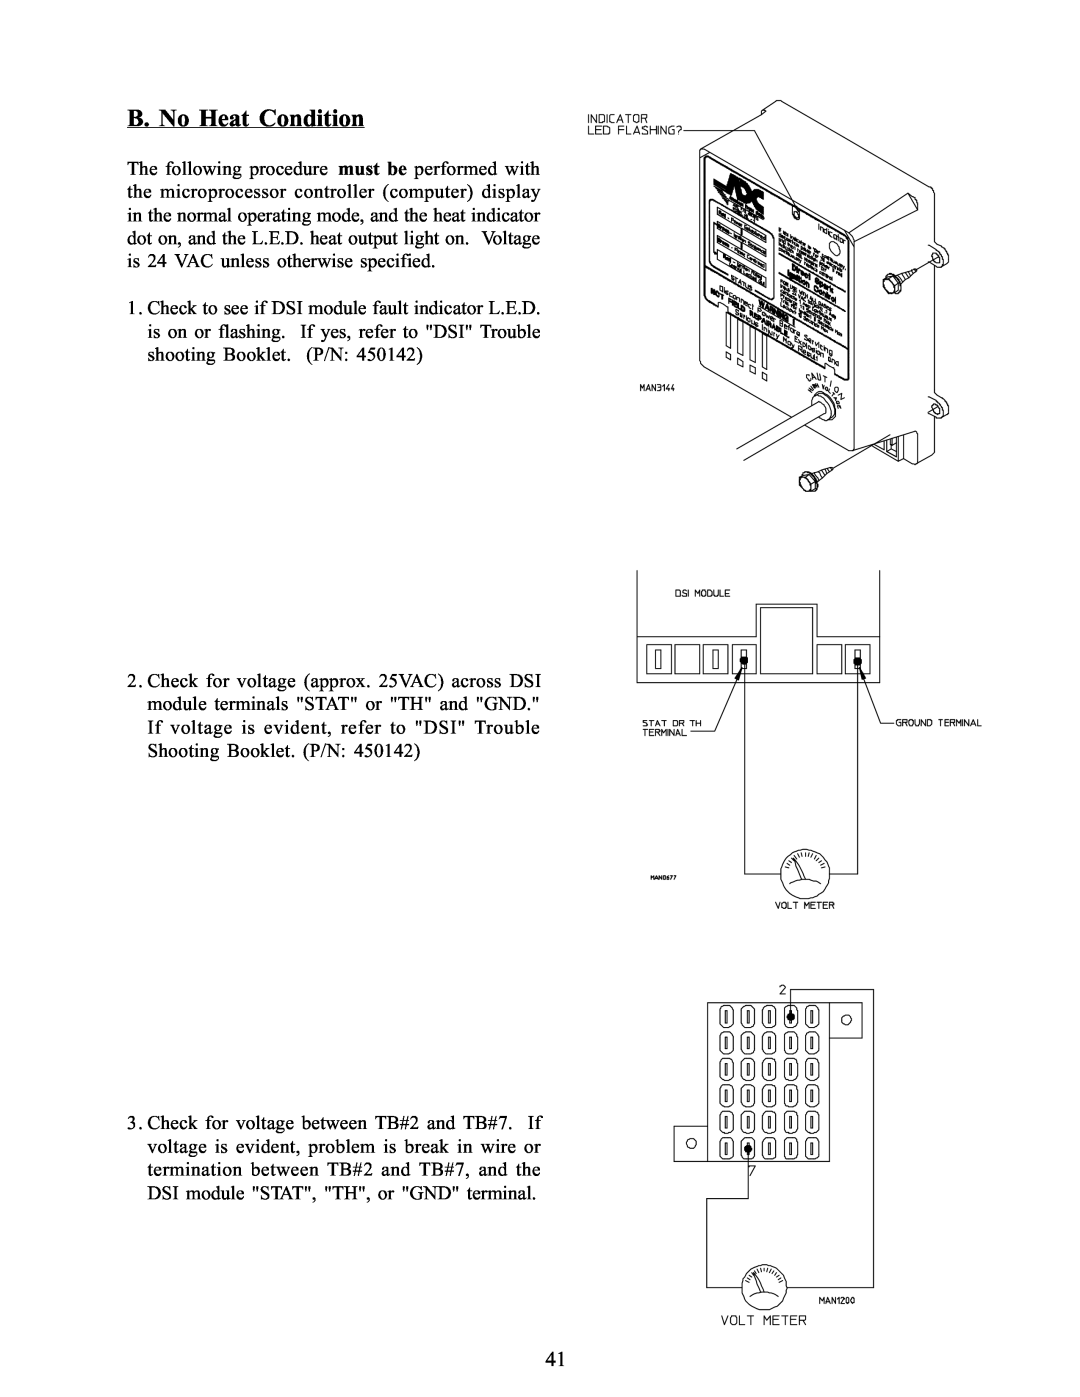 American Dryer Corp WDA-385 service manual B. No Heat Condition 